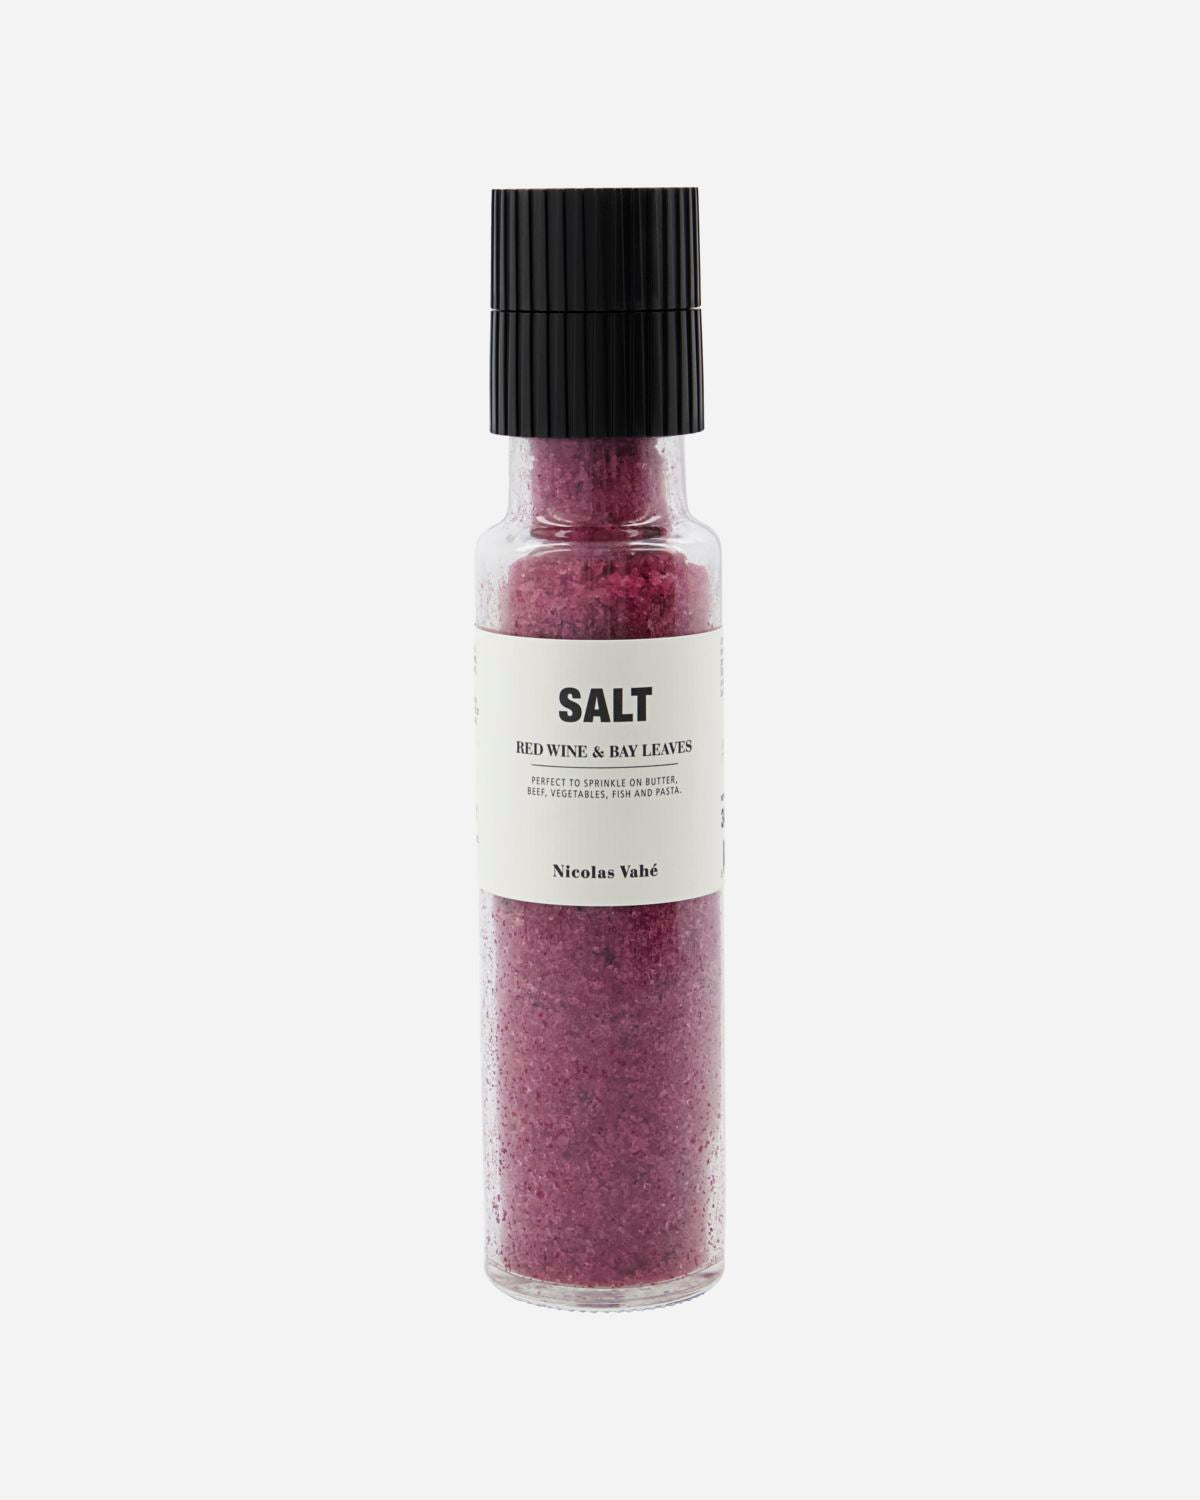 Salt, Red Wine & Bay Leaves Nicolas Vahe